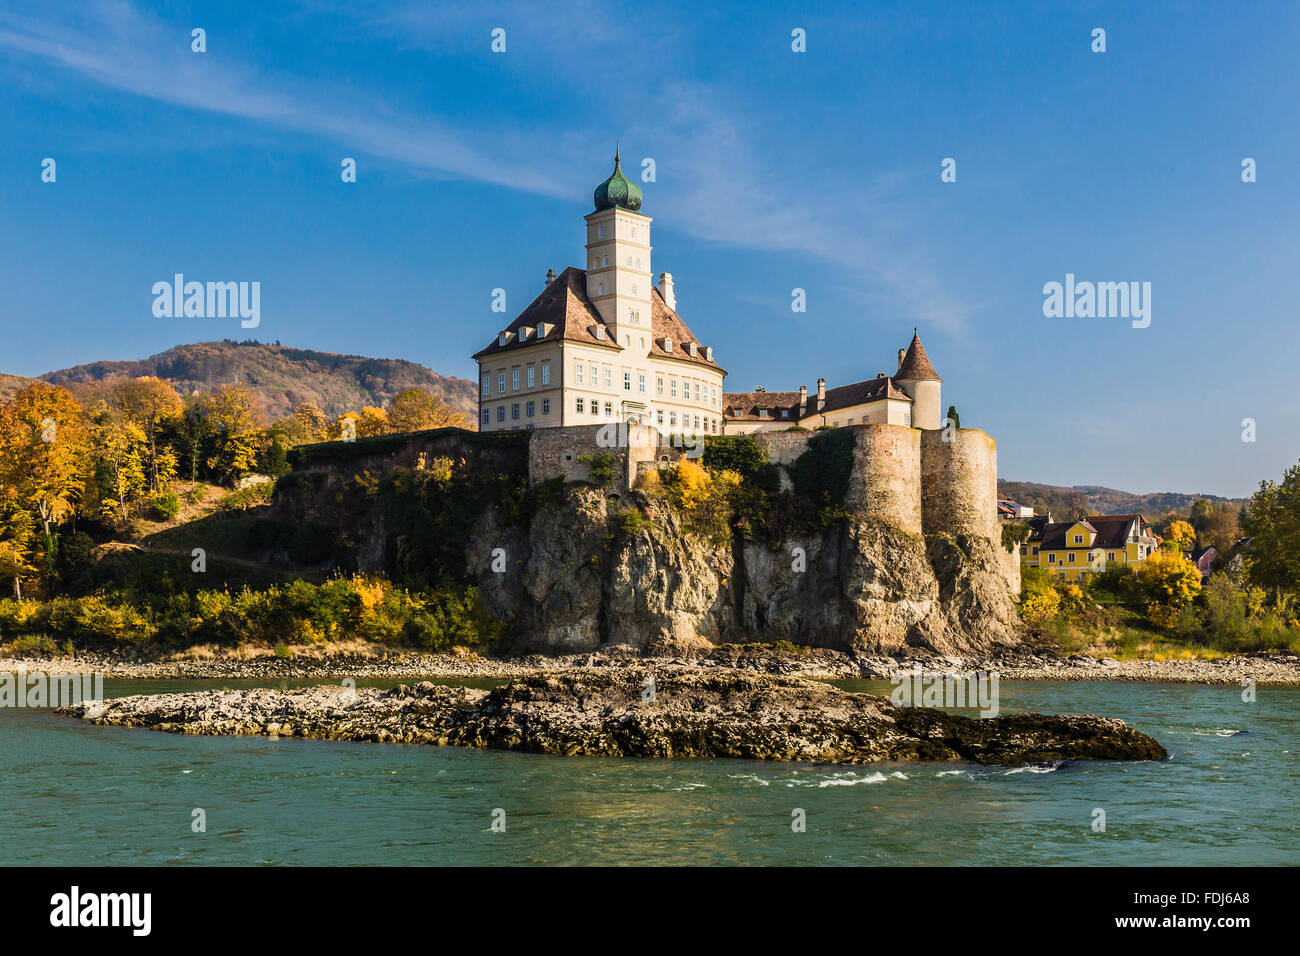 Schonbuhel Castle, Wachau Valley, Danube River, Austria Stock Photo